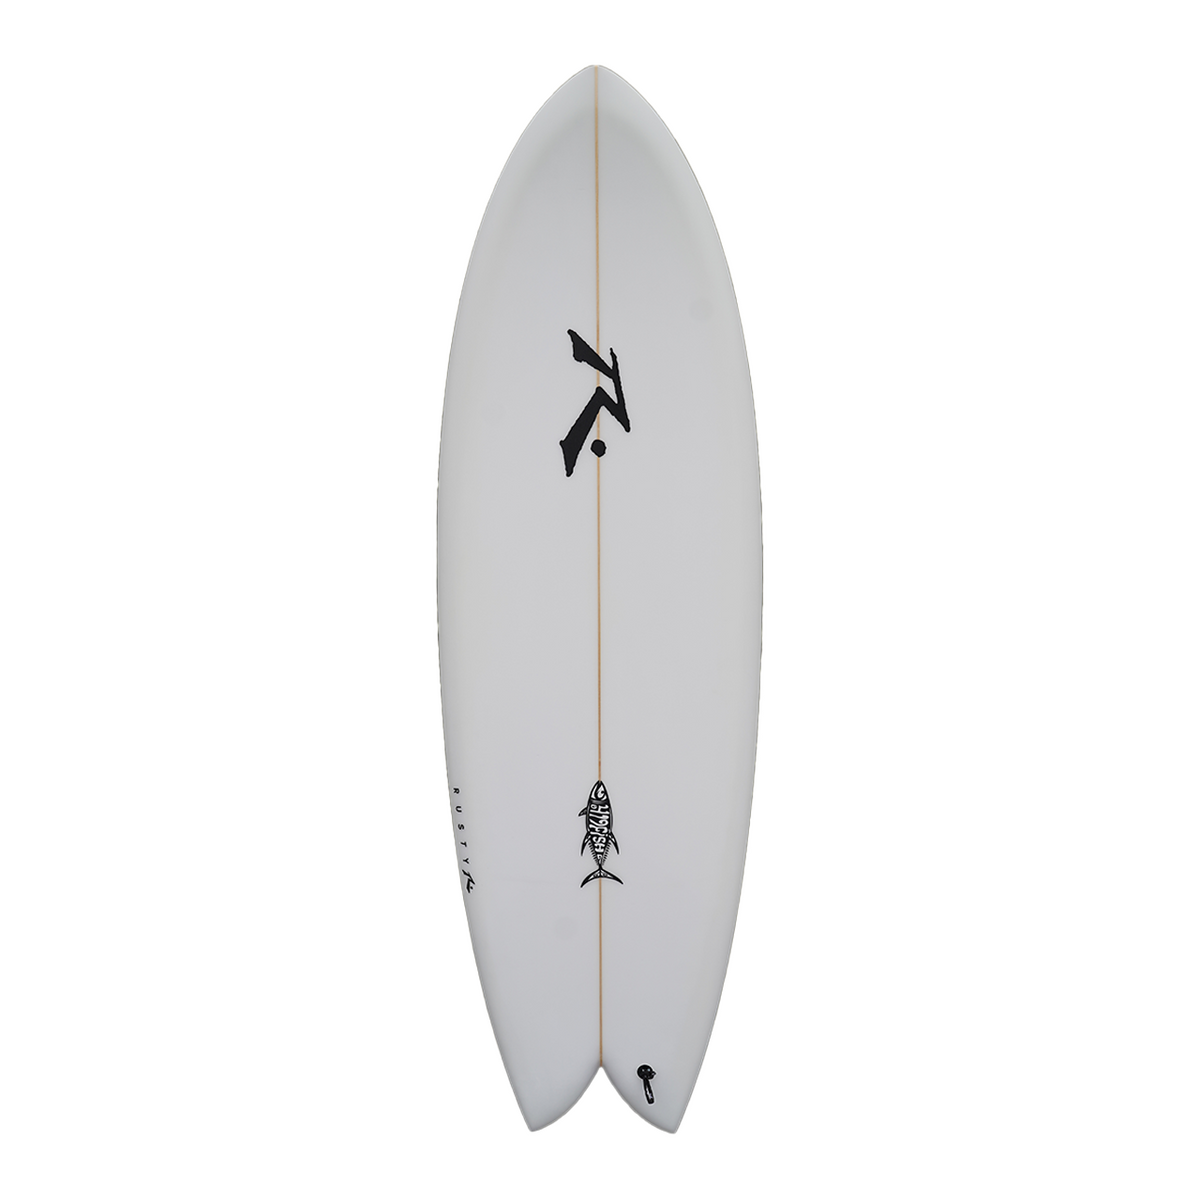 419fish - Alternative - Rusty Surfboards - Top View 